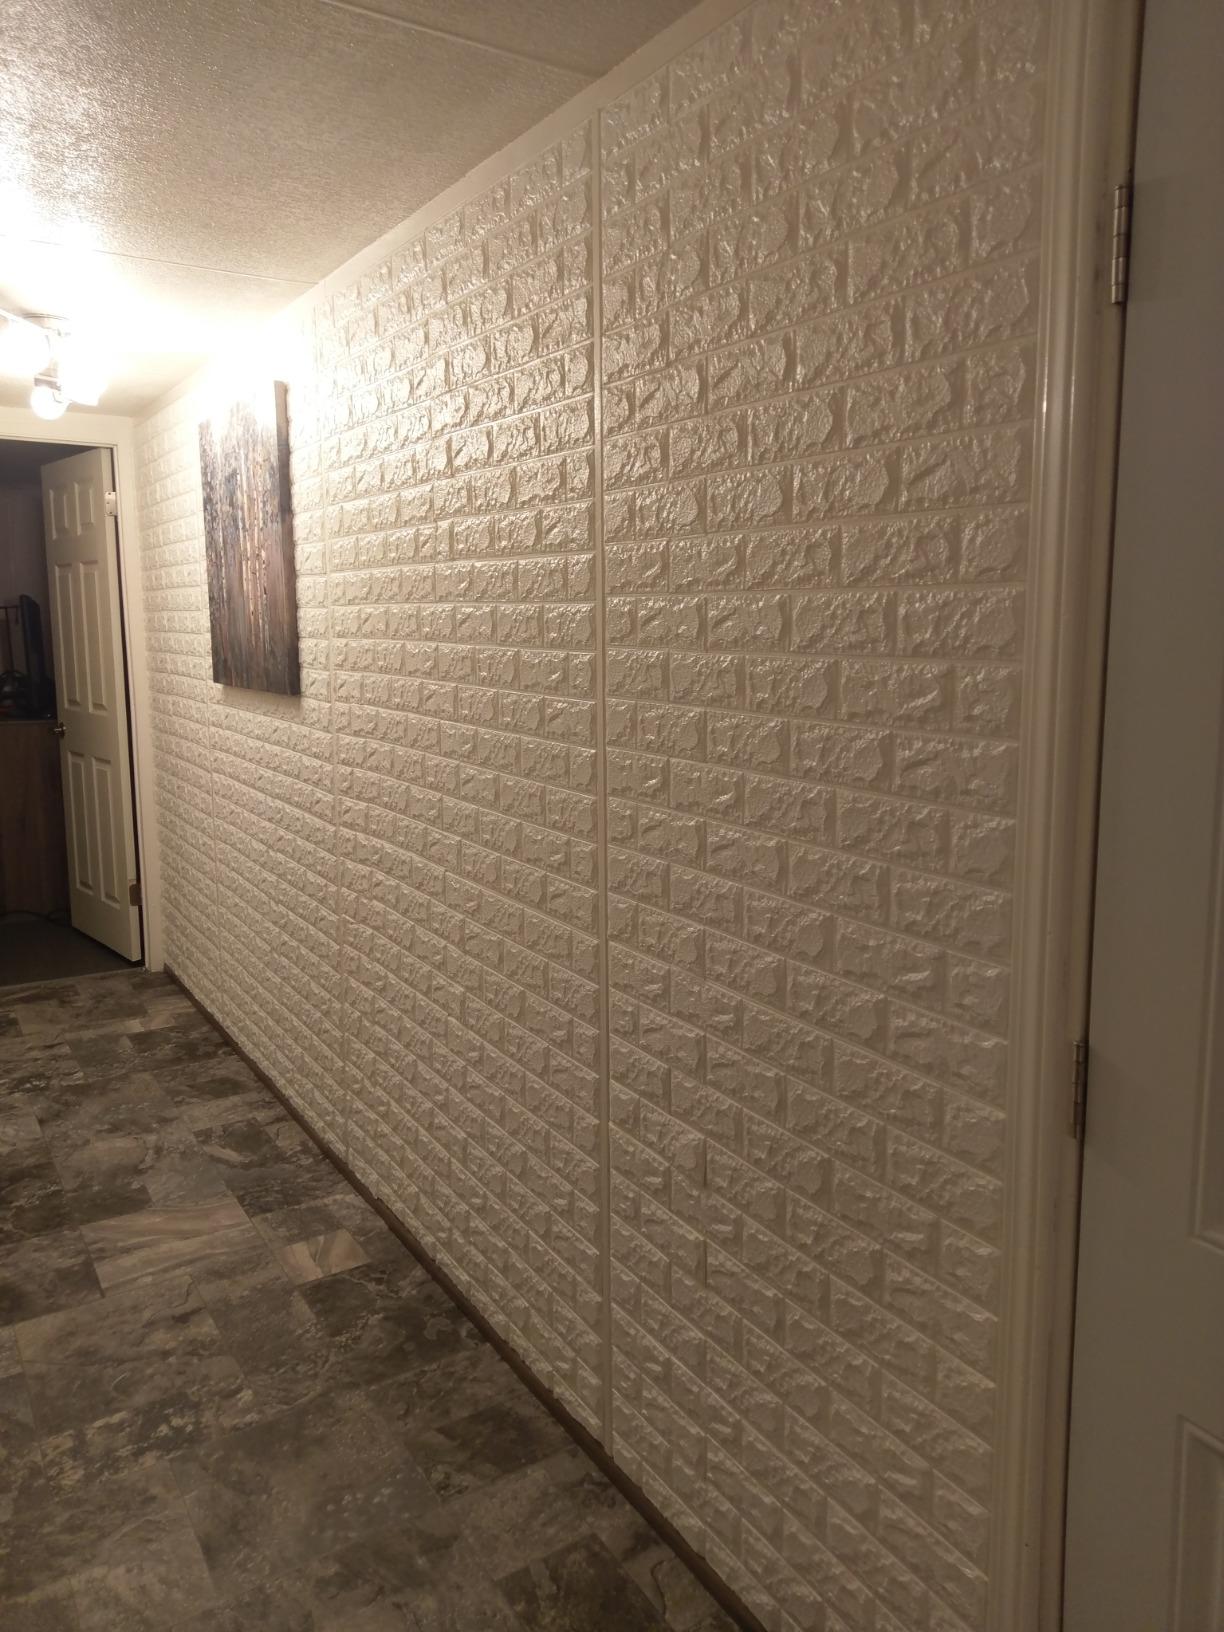 A06004-Peel and Stick 3D Wall Panels for Interior Wall Decor, Self-Adhesive Foam Brick Wallpaper